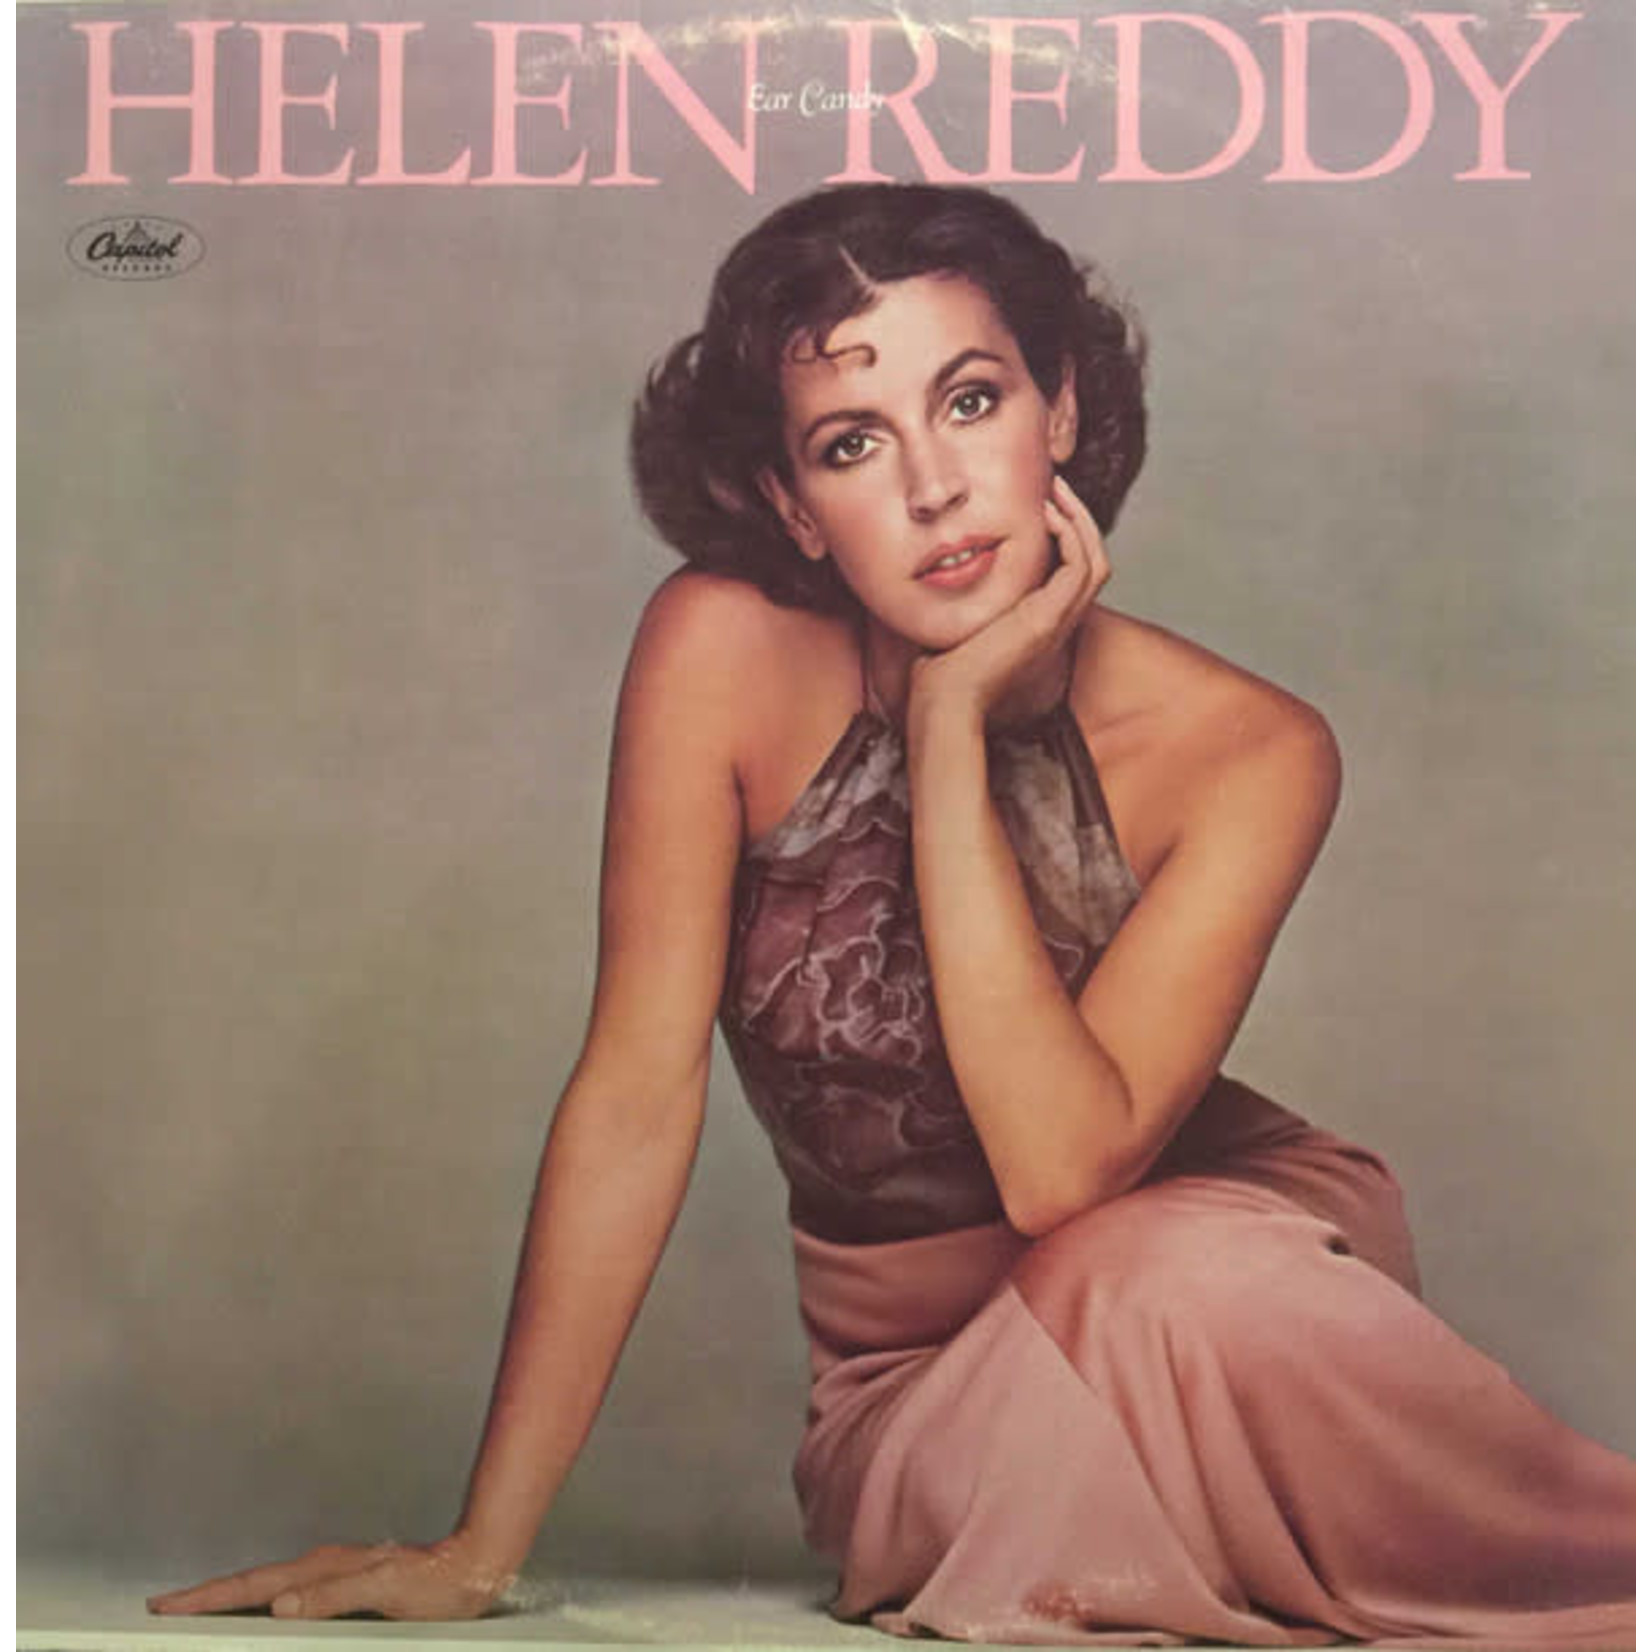 Helen Reddy Helen Reddy – Ear Candy (VG, 1977, LP, Capitol Records – SW-11640, Canada)